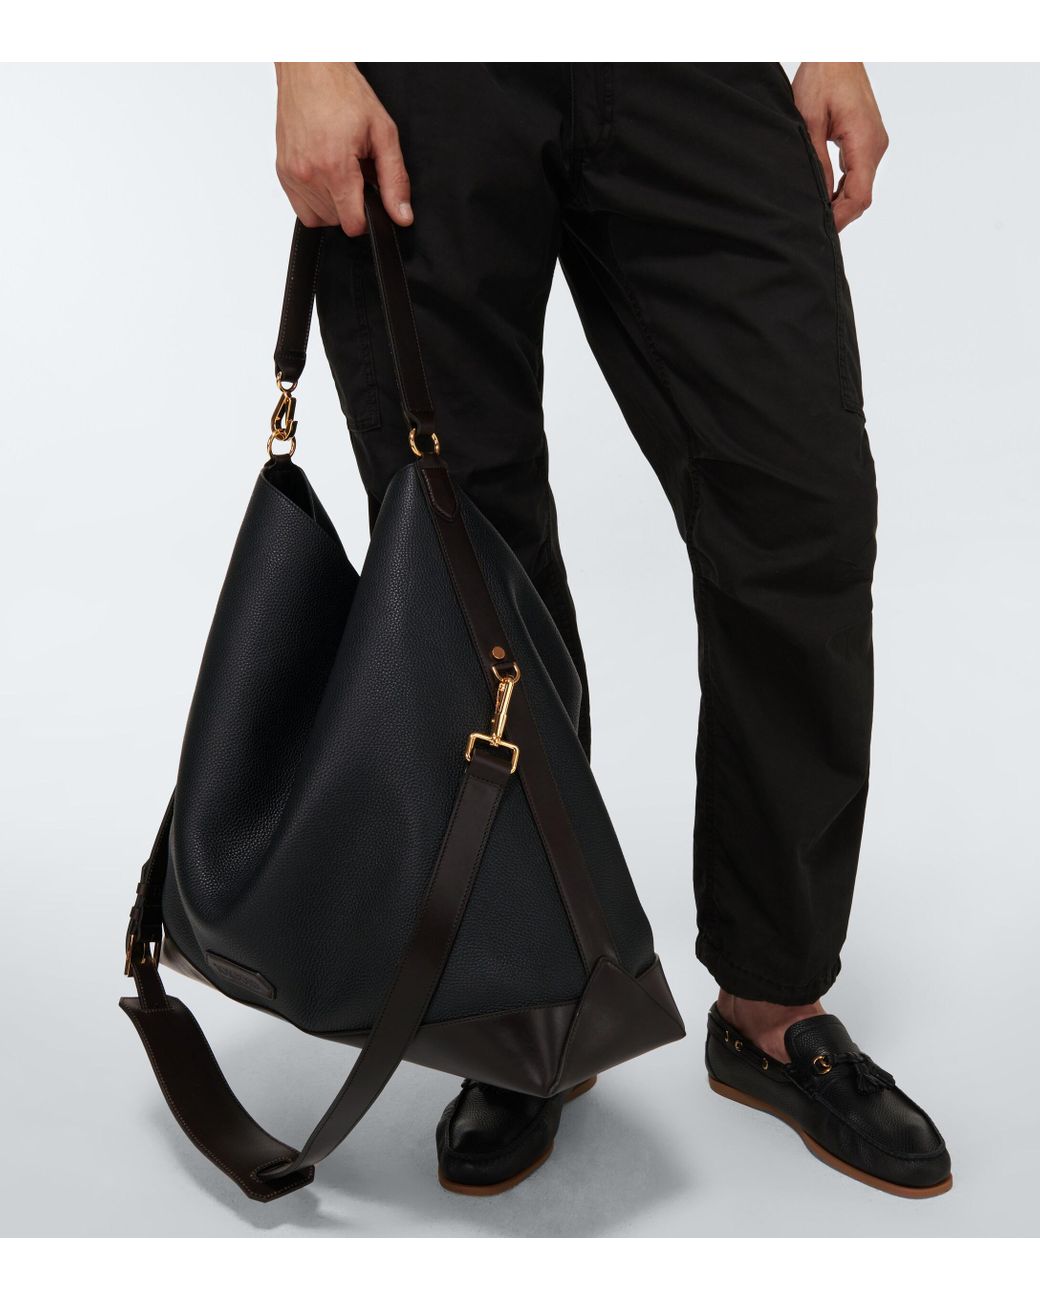 Tom Ford Logo Leather Tote Bag in Black for Men | Lyst UK